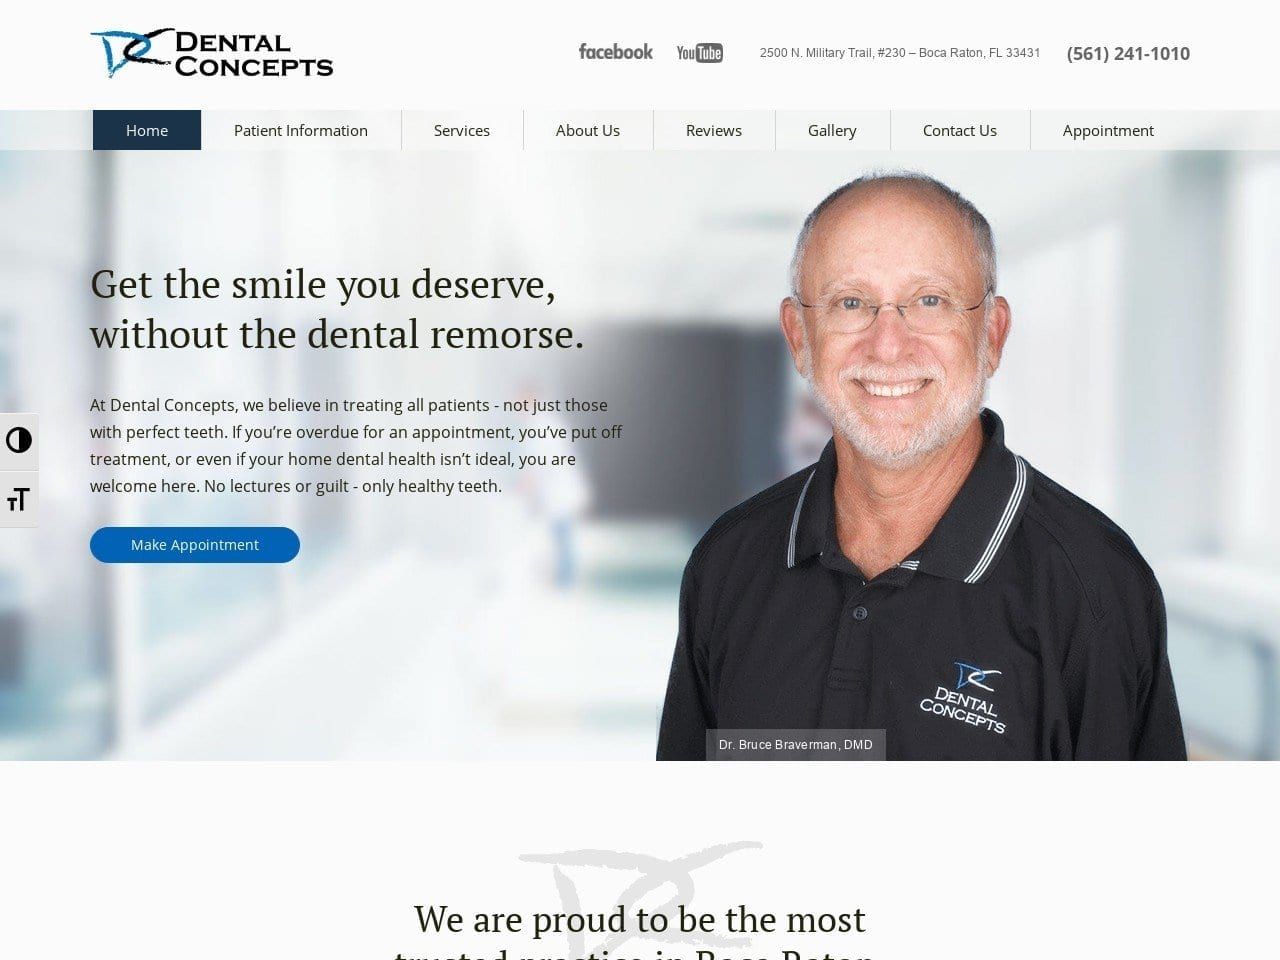 Dental Concepts / Bruce Braverman DMD Website Screenshot from bocadentalconcepts.com